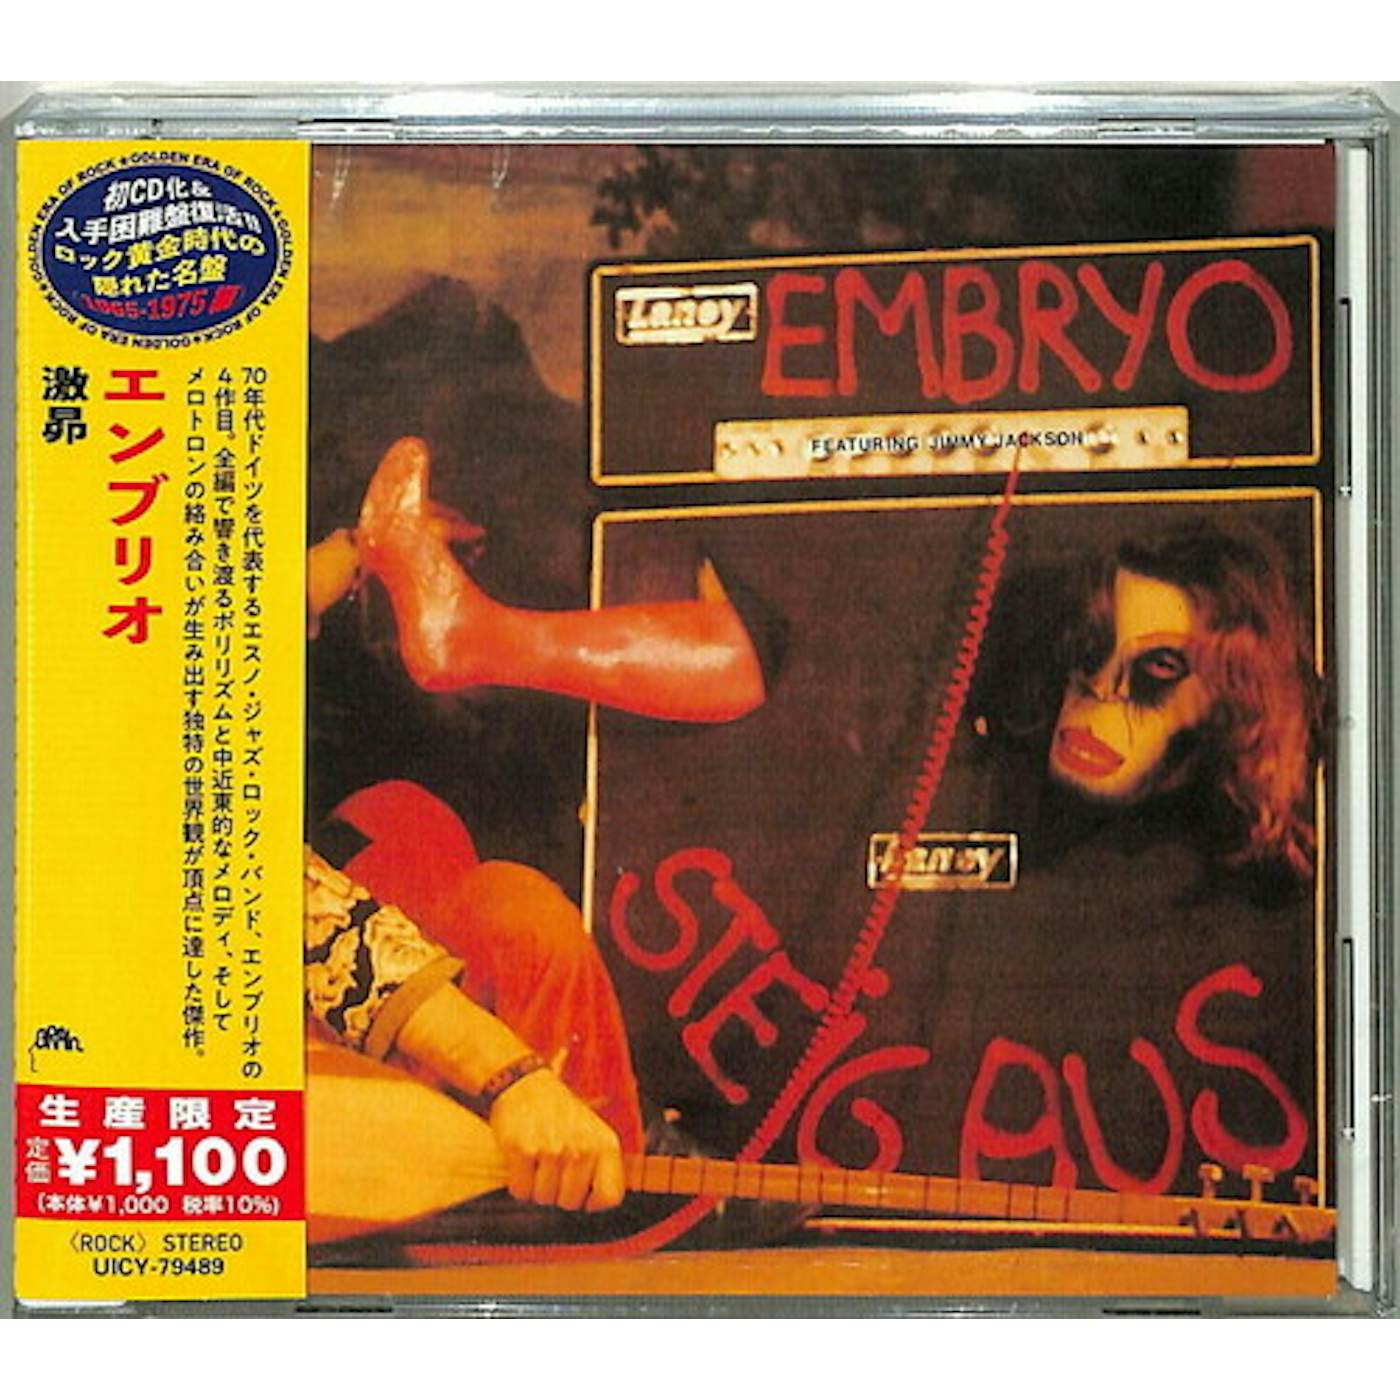 Embryo STEIG AUS CD